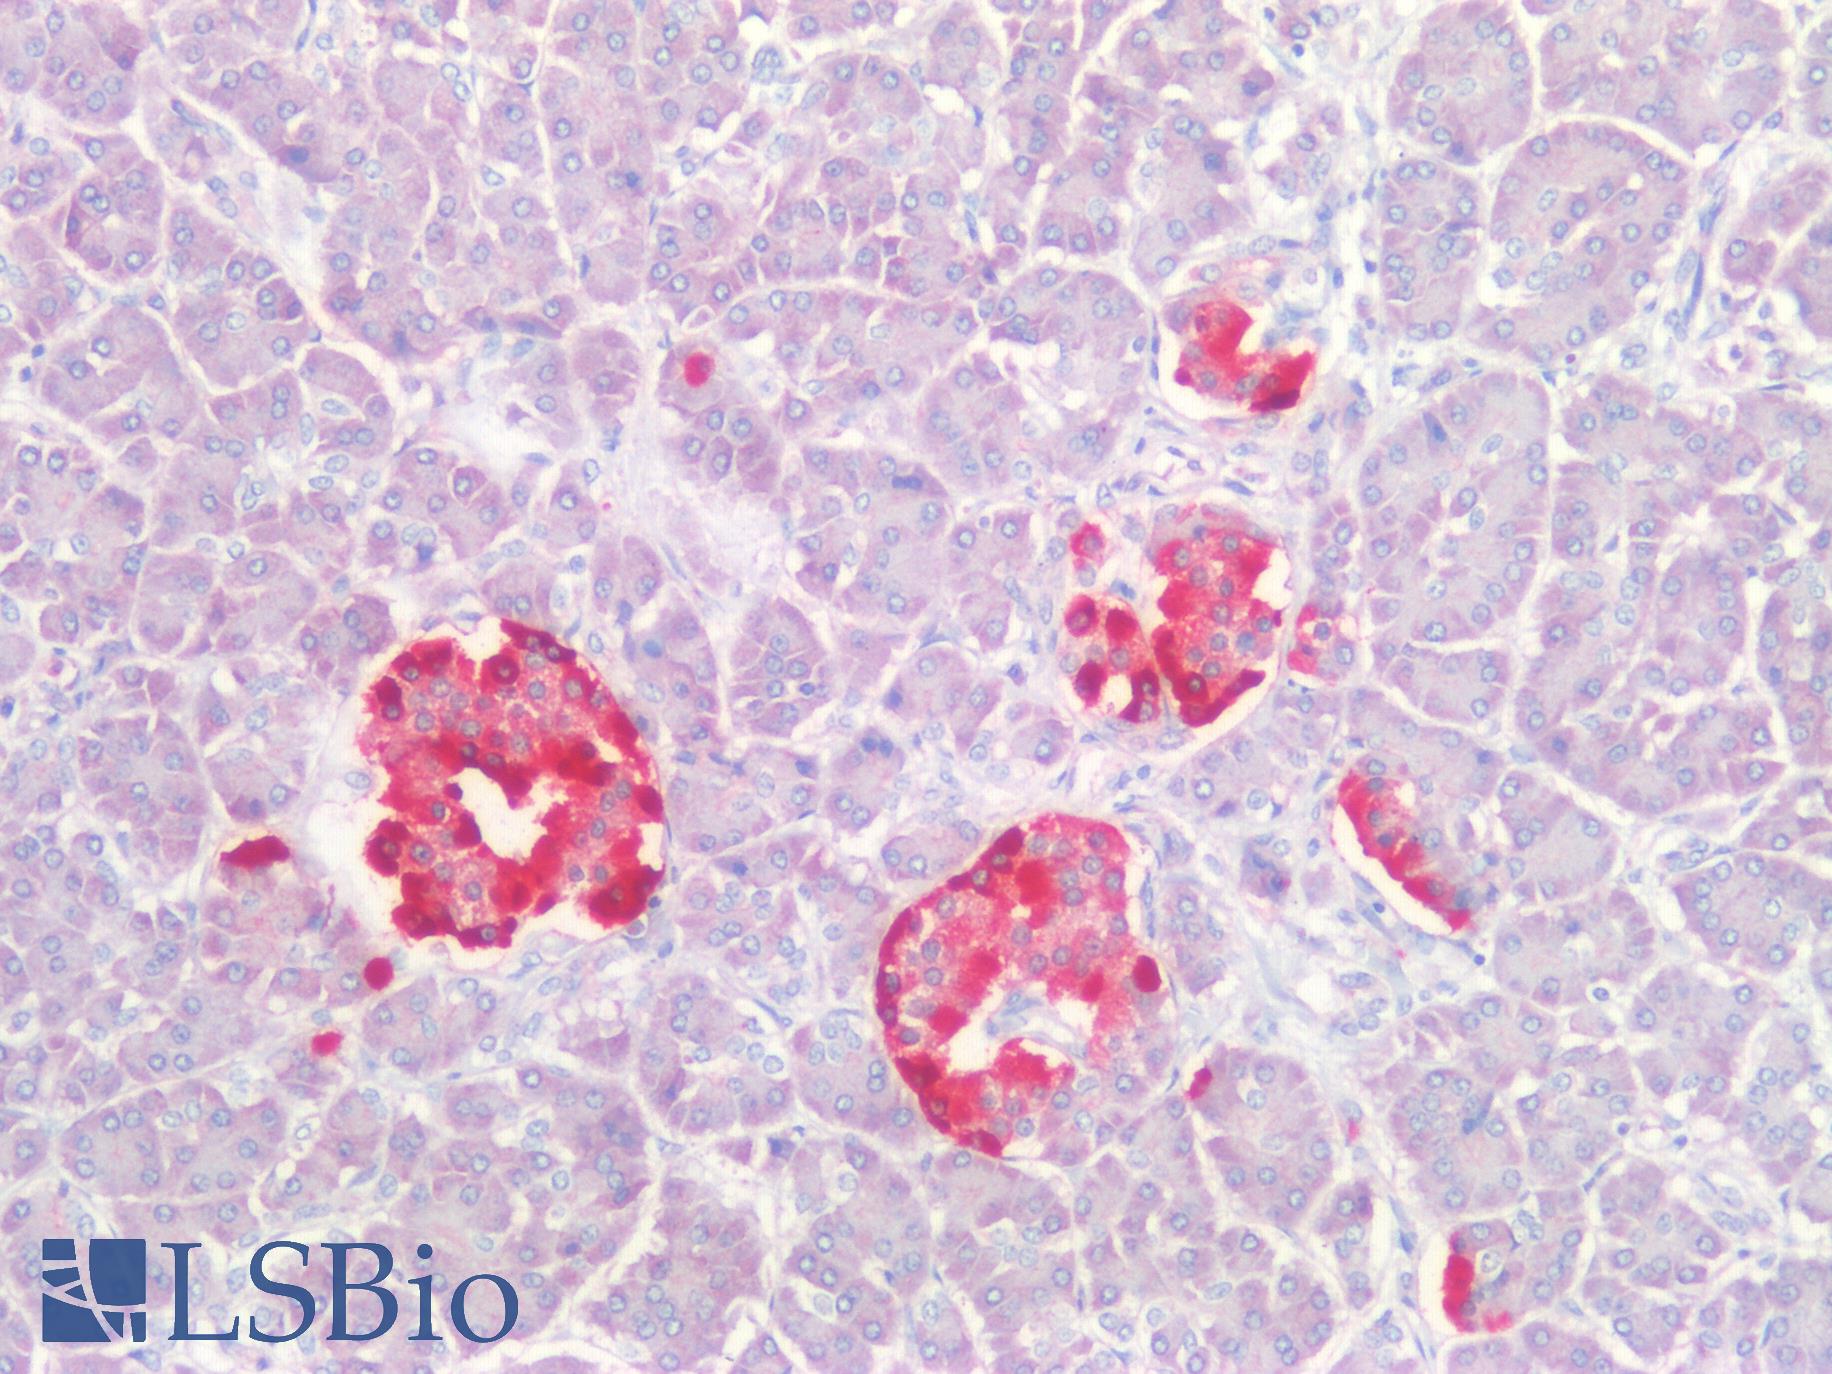 CHGA / Chromogranin A Antibody - Human Pancreatic Islets of Langerhans: Formalin-Fixed, Paraffin-Embedded (FFPE)